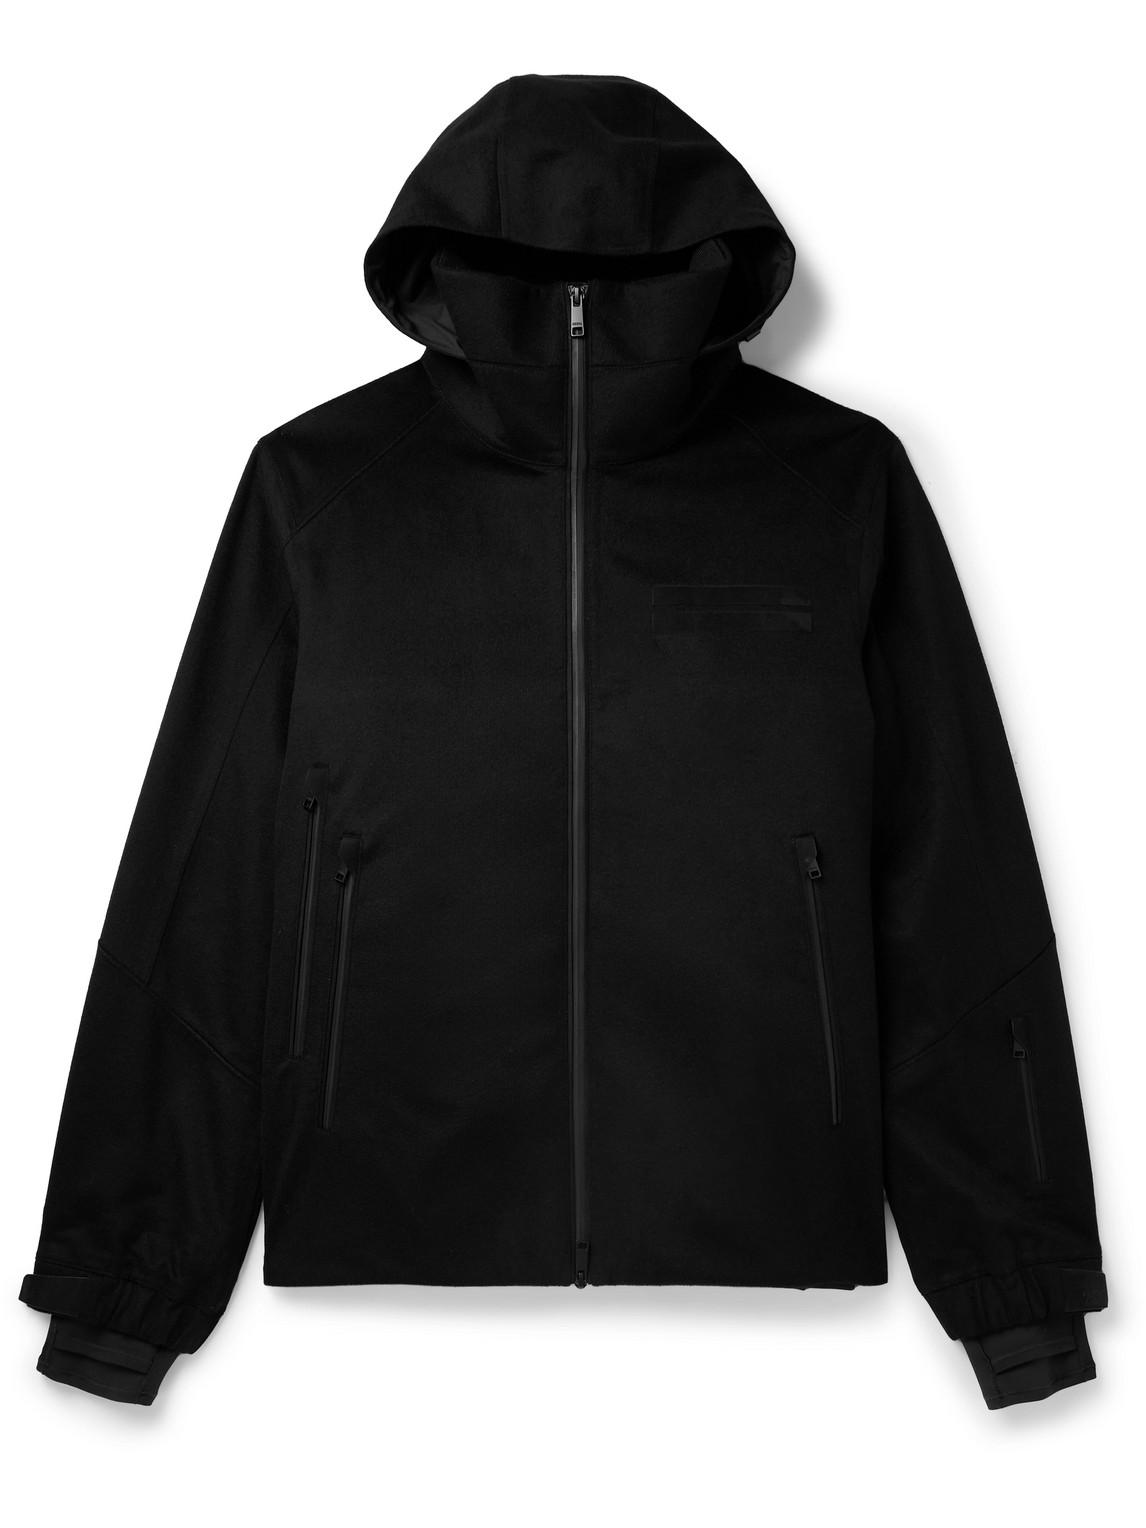 Zegna - Convertible Leather-Trimmed Cashmere Down Hooded Ski Jacket - Men - Black - XL von Zegna